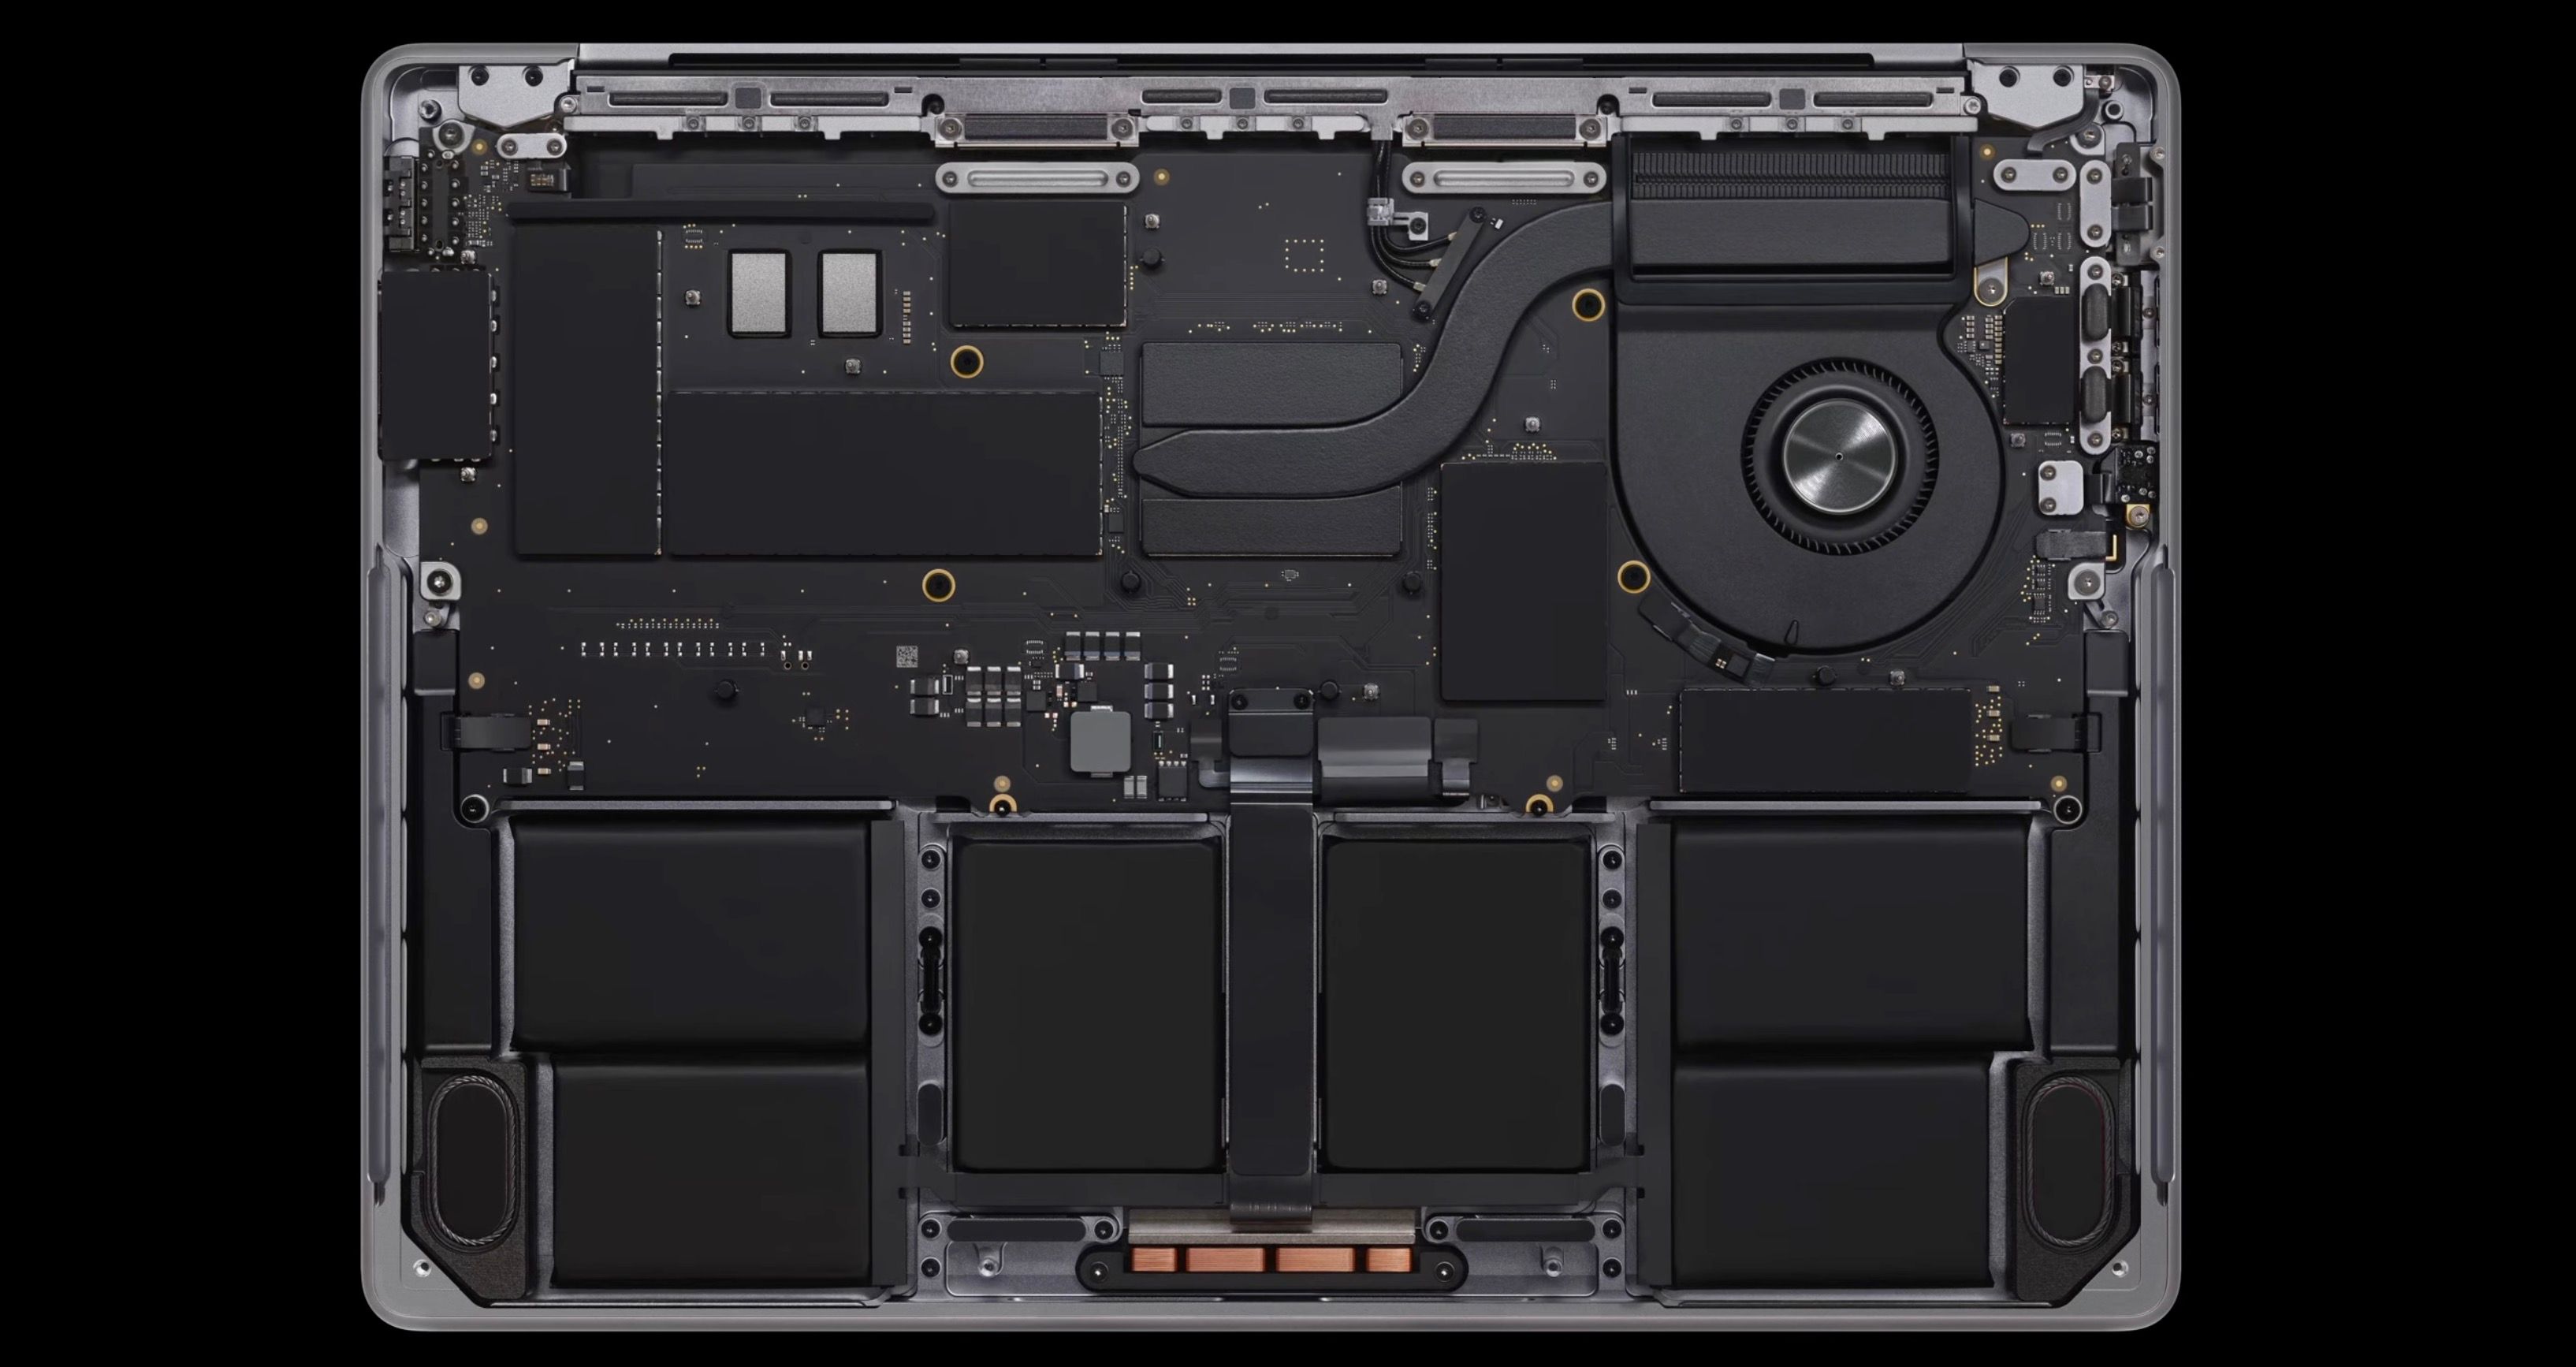 Inside the M3 MacBook Pro